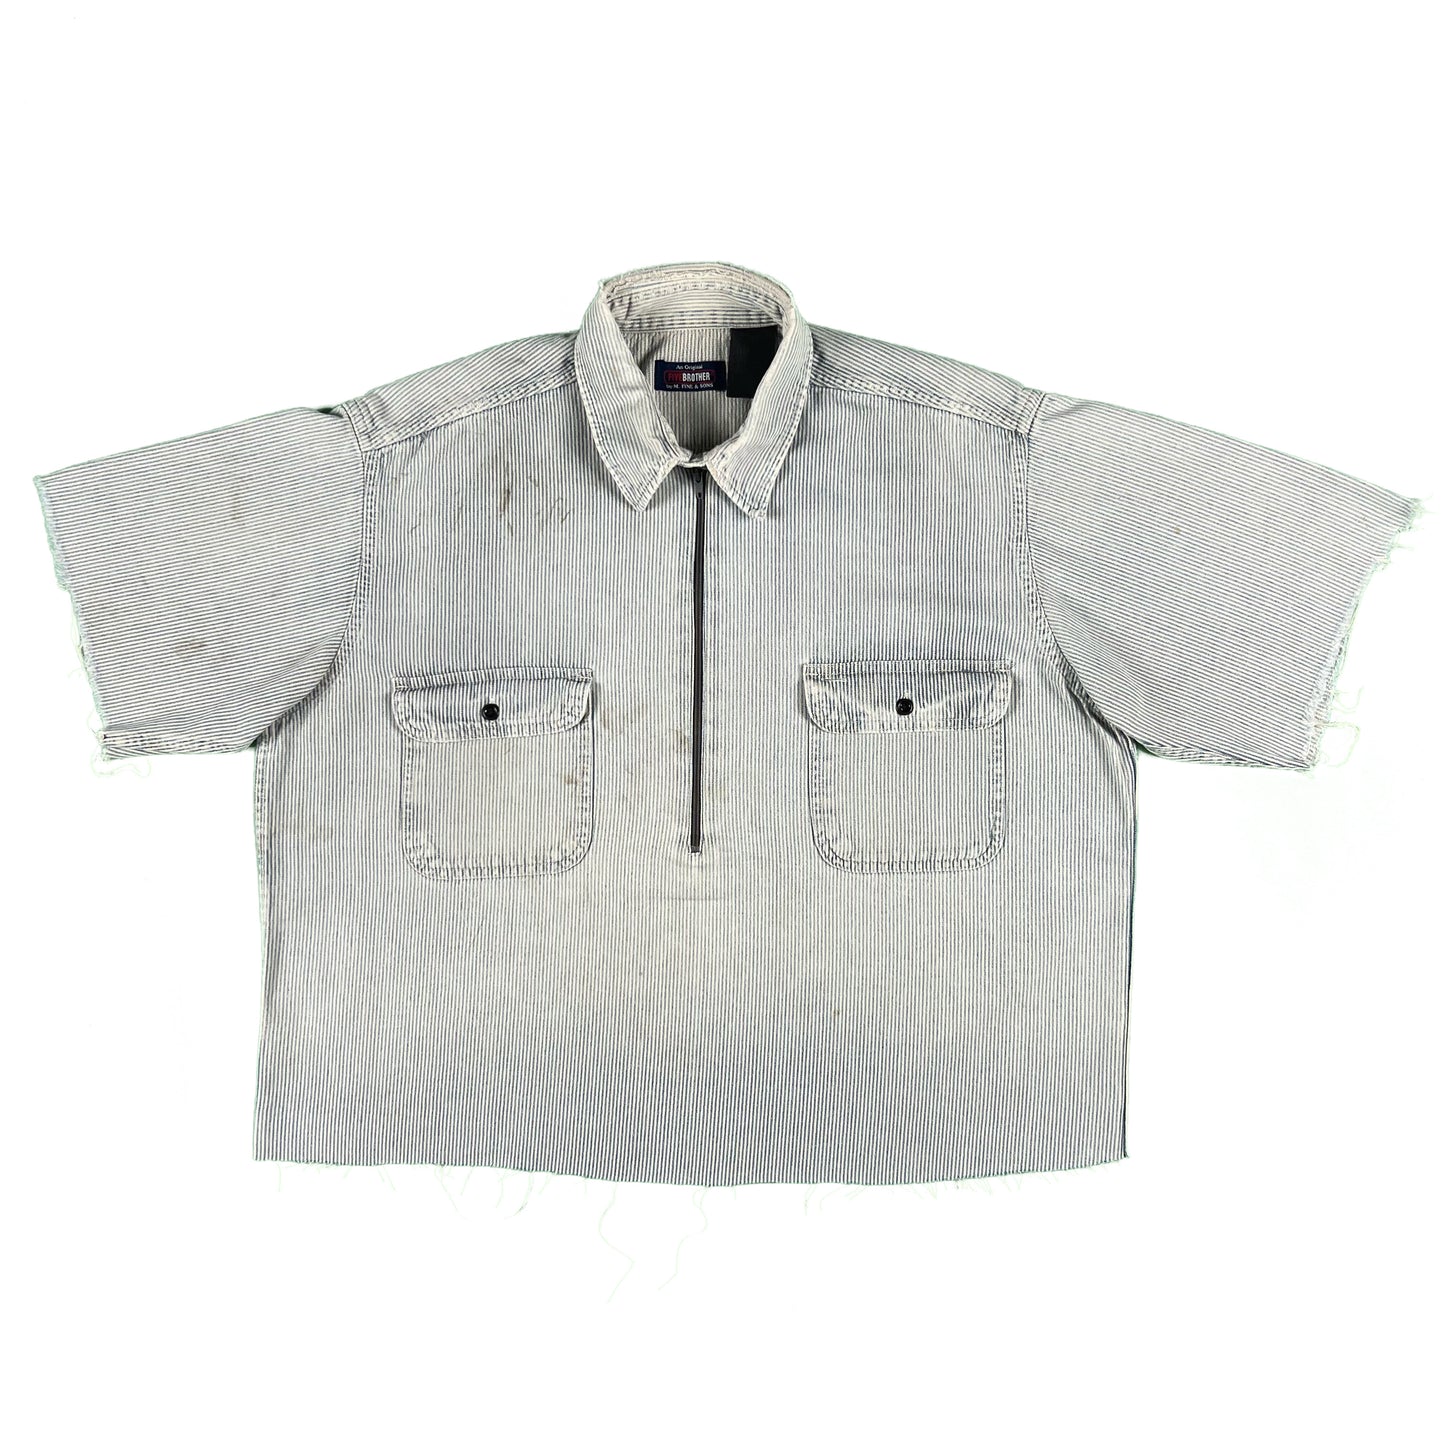 90s Chopped Boxy Hickory Striped Work Shirt- XL